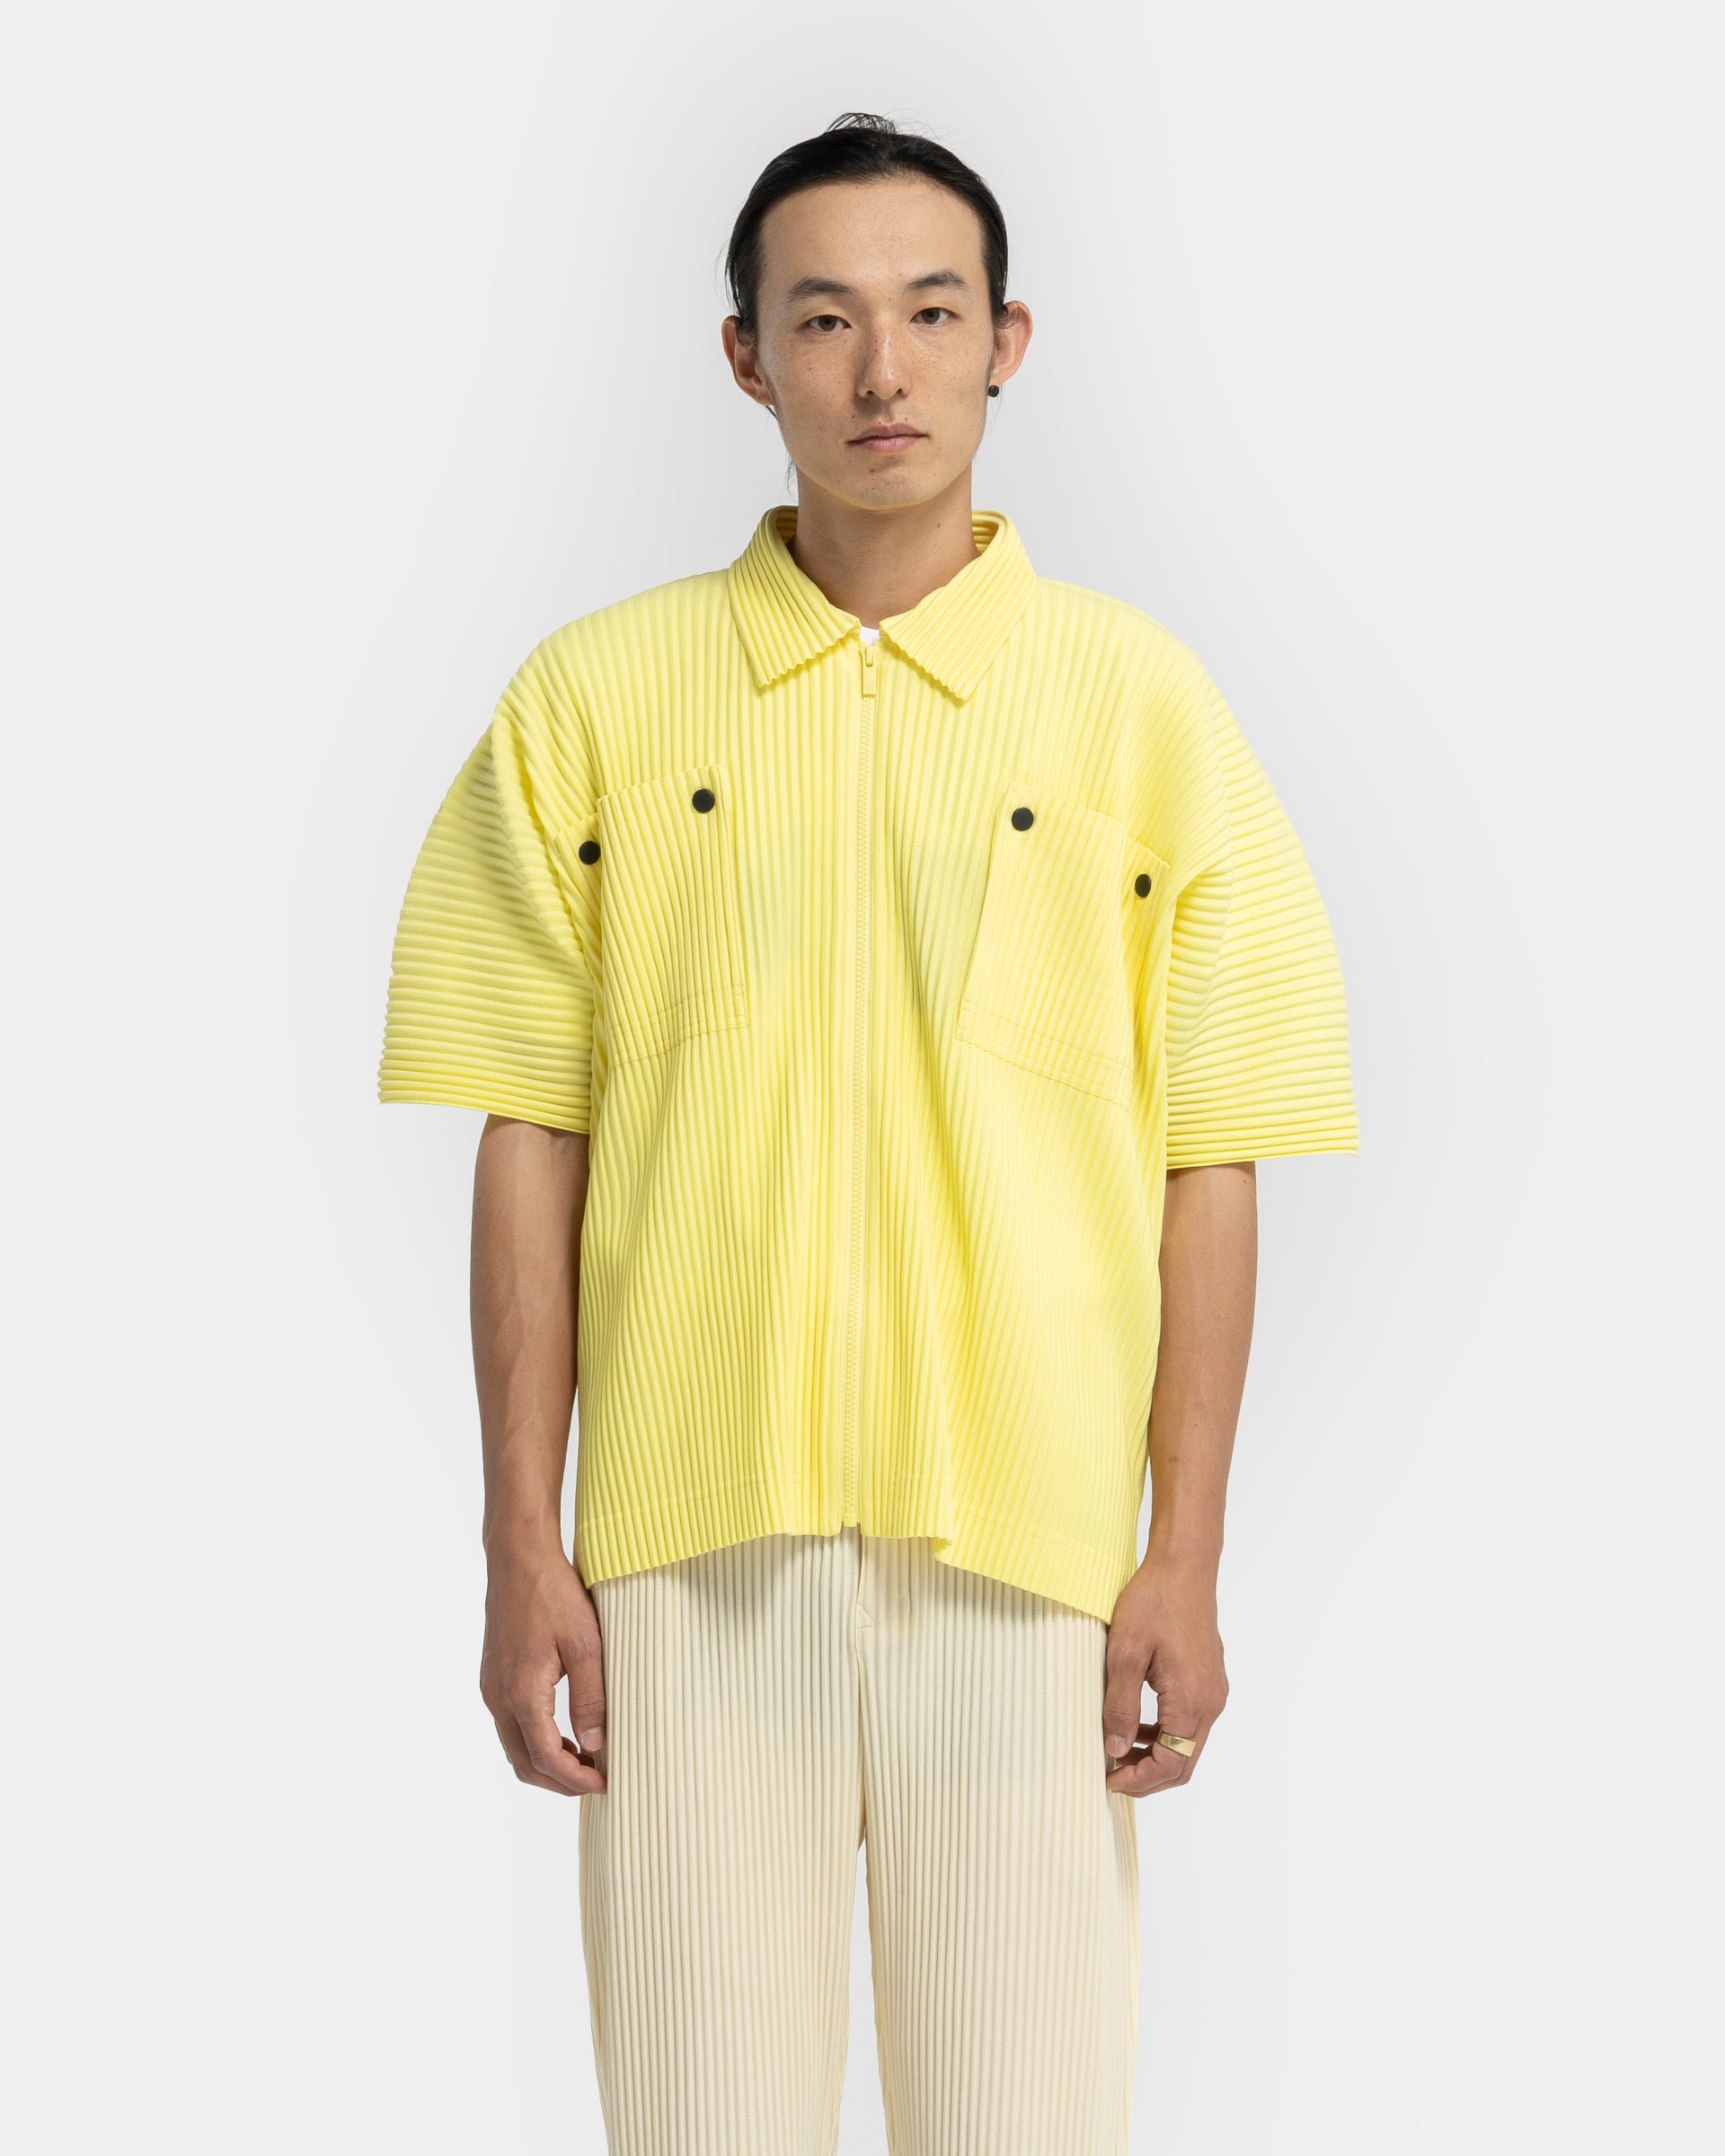 Flip Shirt in Spring Yellow